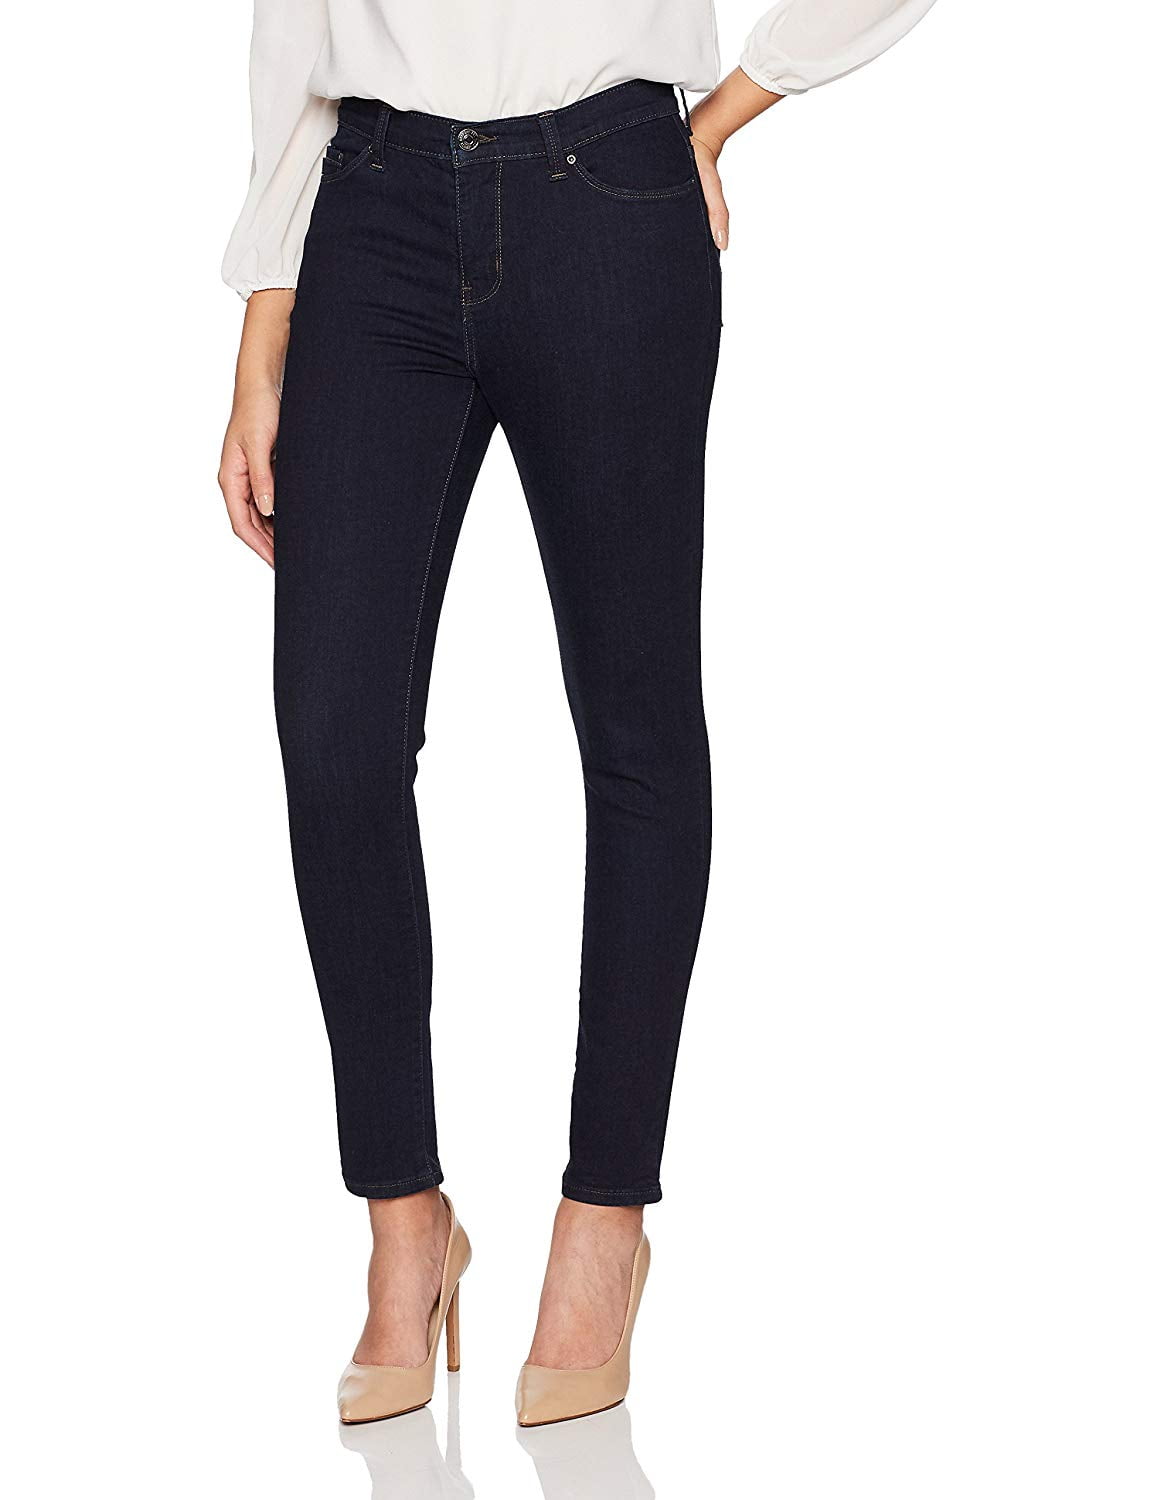 Women's Jeans Petite Skinny Leg Slimming Stretch 4 - Walmart.com ...